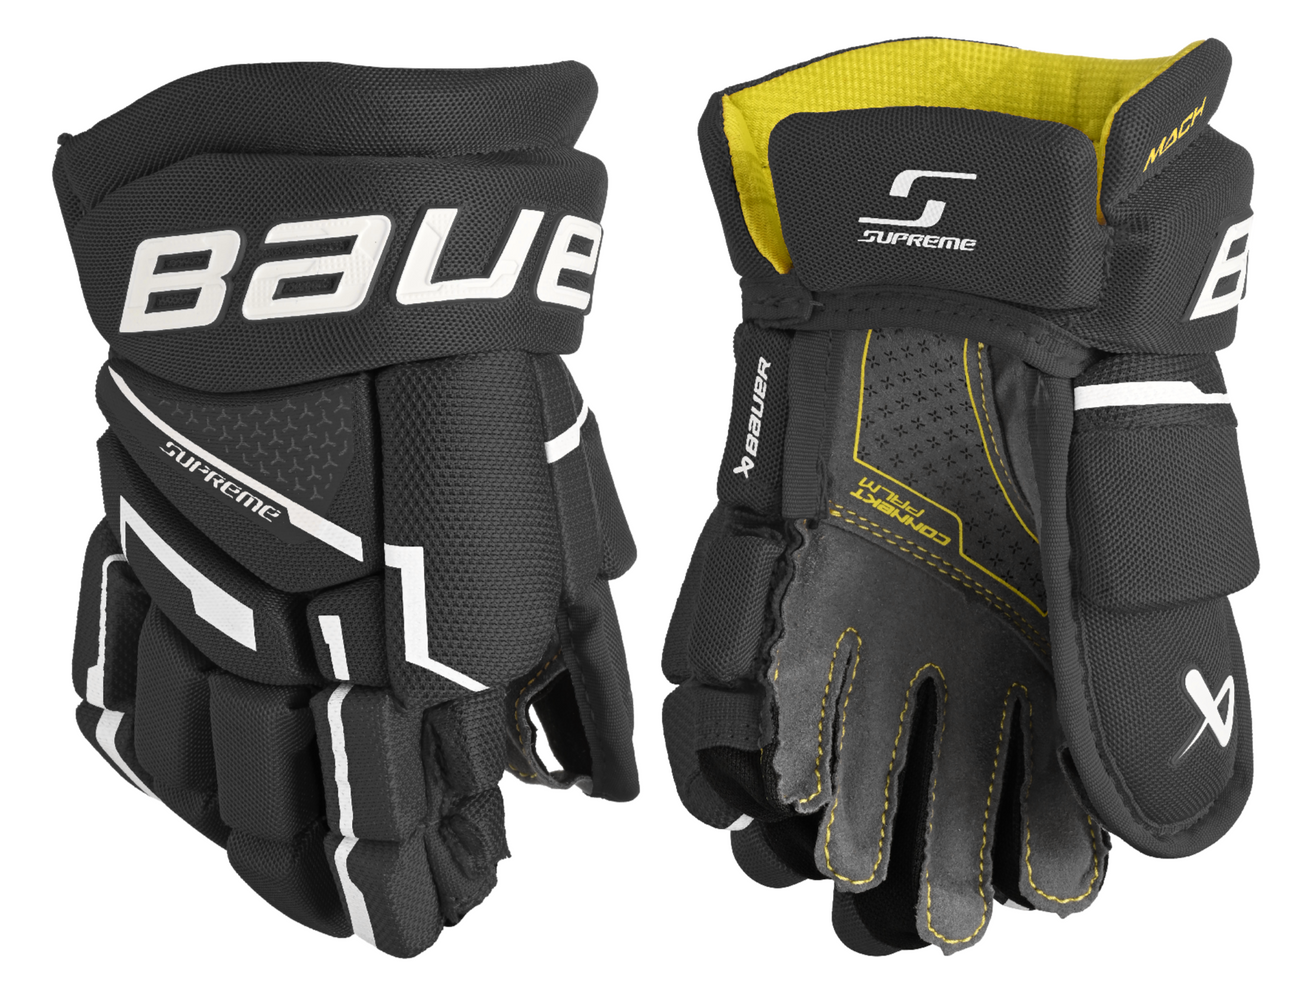 Bauer Supreme Youth Hockey Gloves